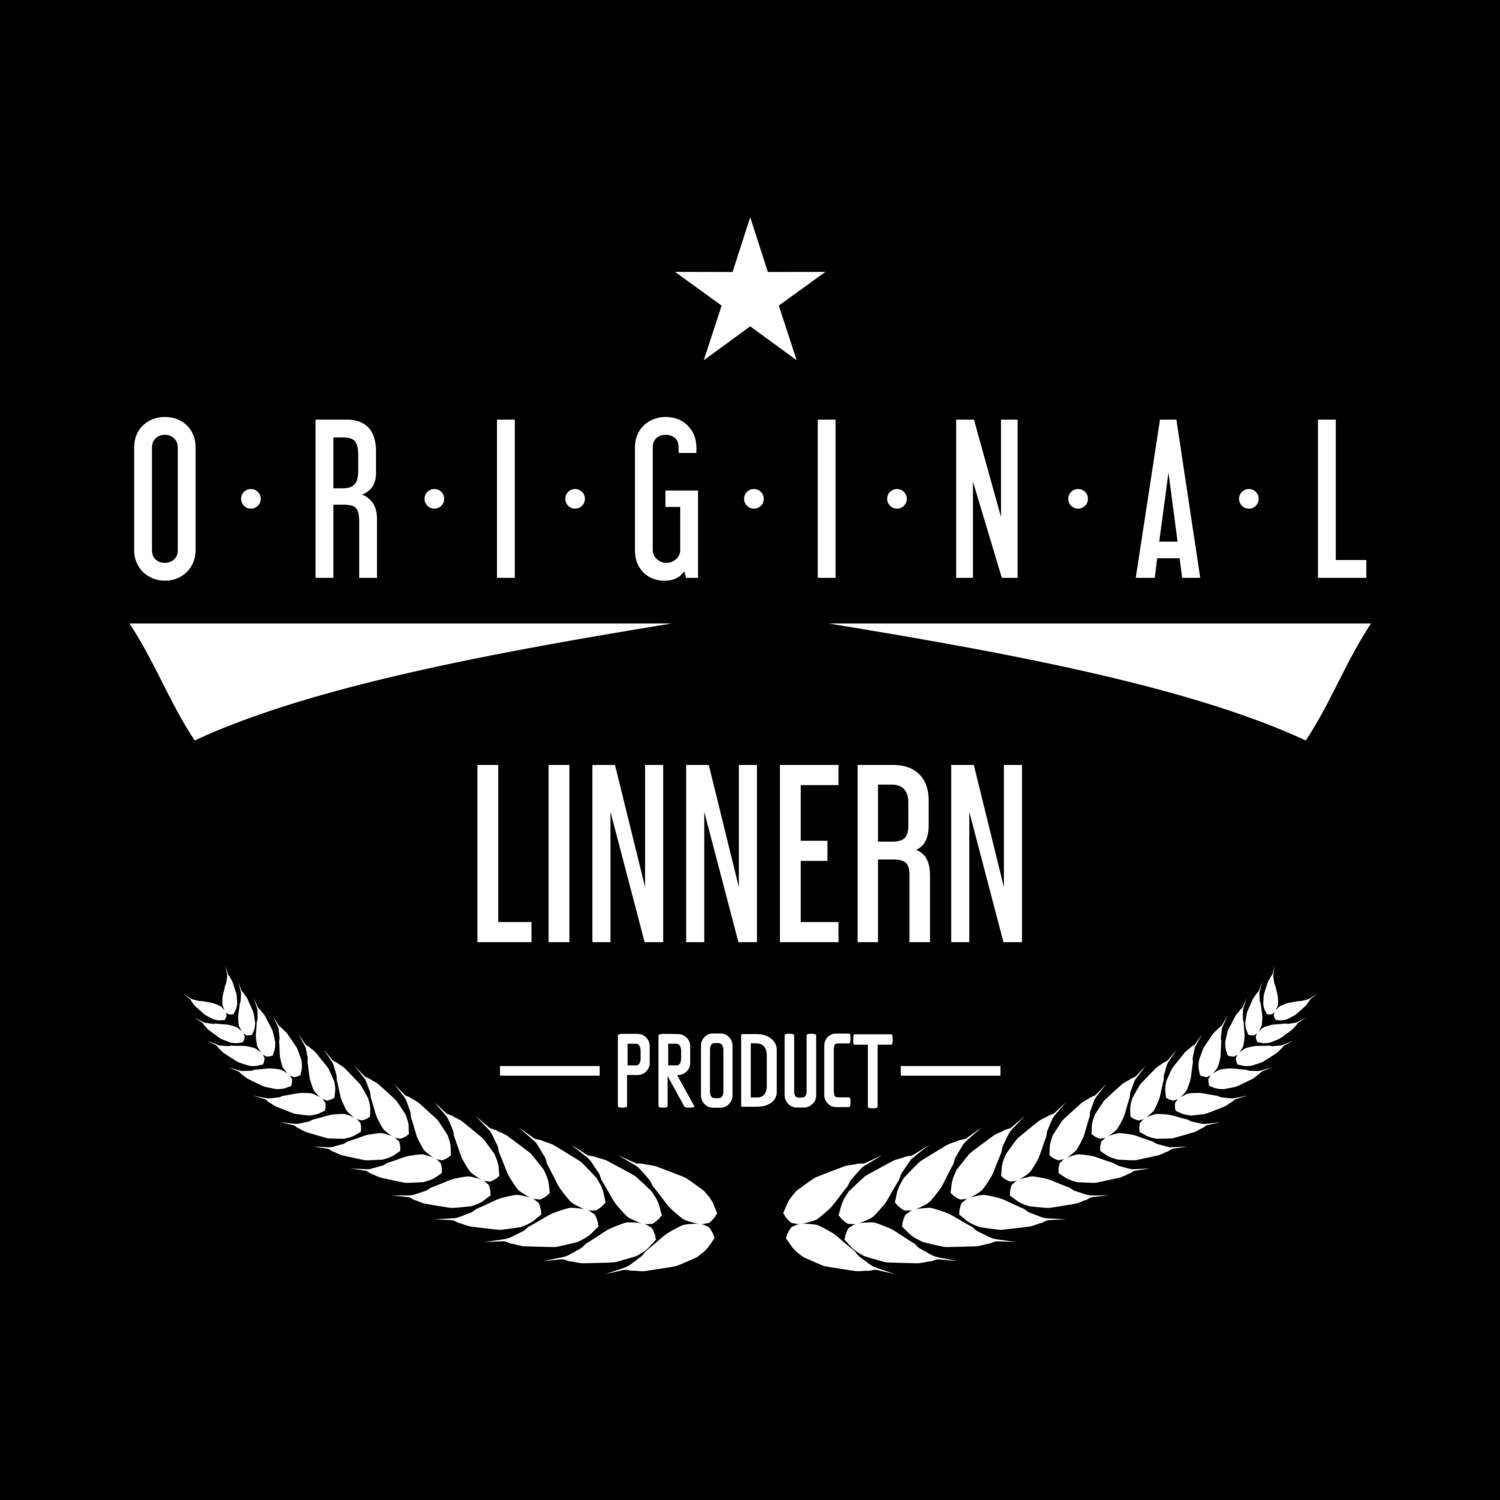 Linnern T-Shirt »Original Product«